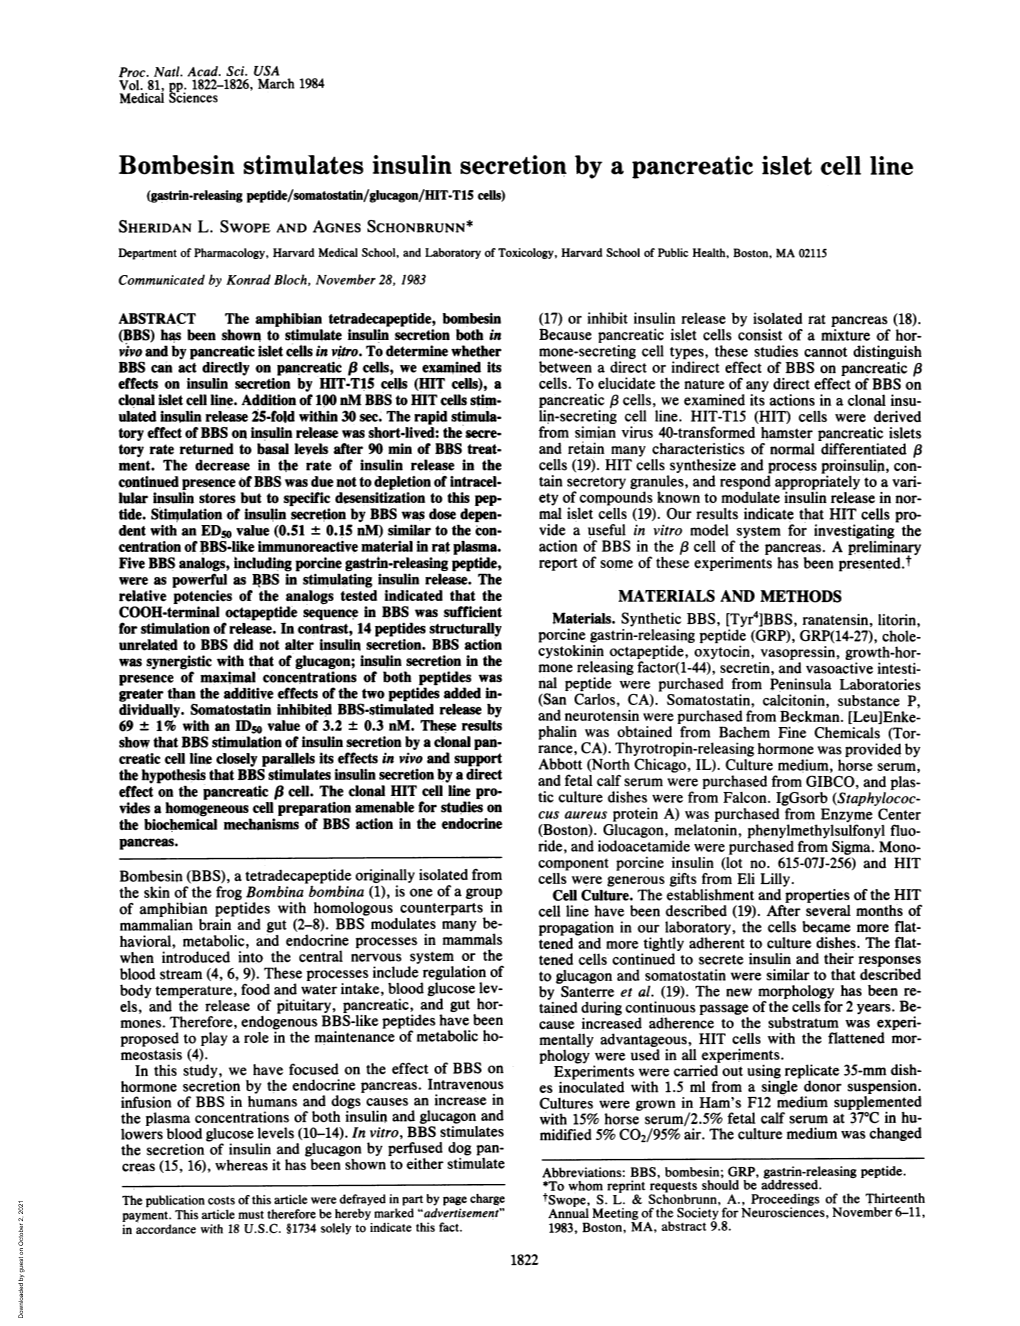 Bombesin Stimulates Insulin Secretion by a Pancreatic Islet Cell Line (Gastrin-Releasing Peptide/Somatostatin/Glucagon/HIT-T15 Cells) SHERIDAN L